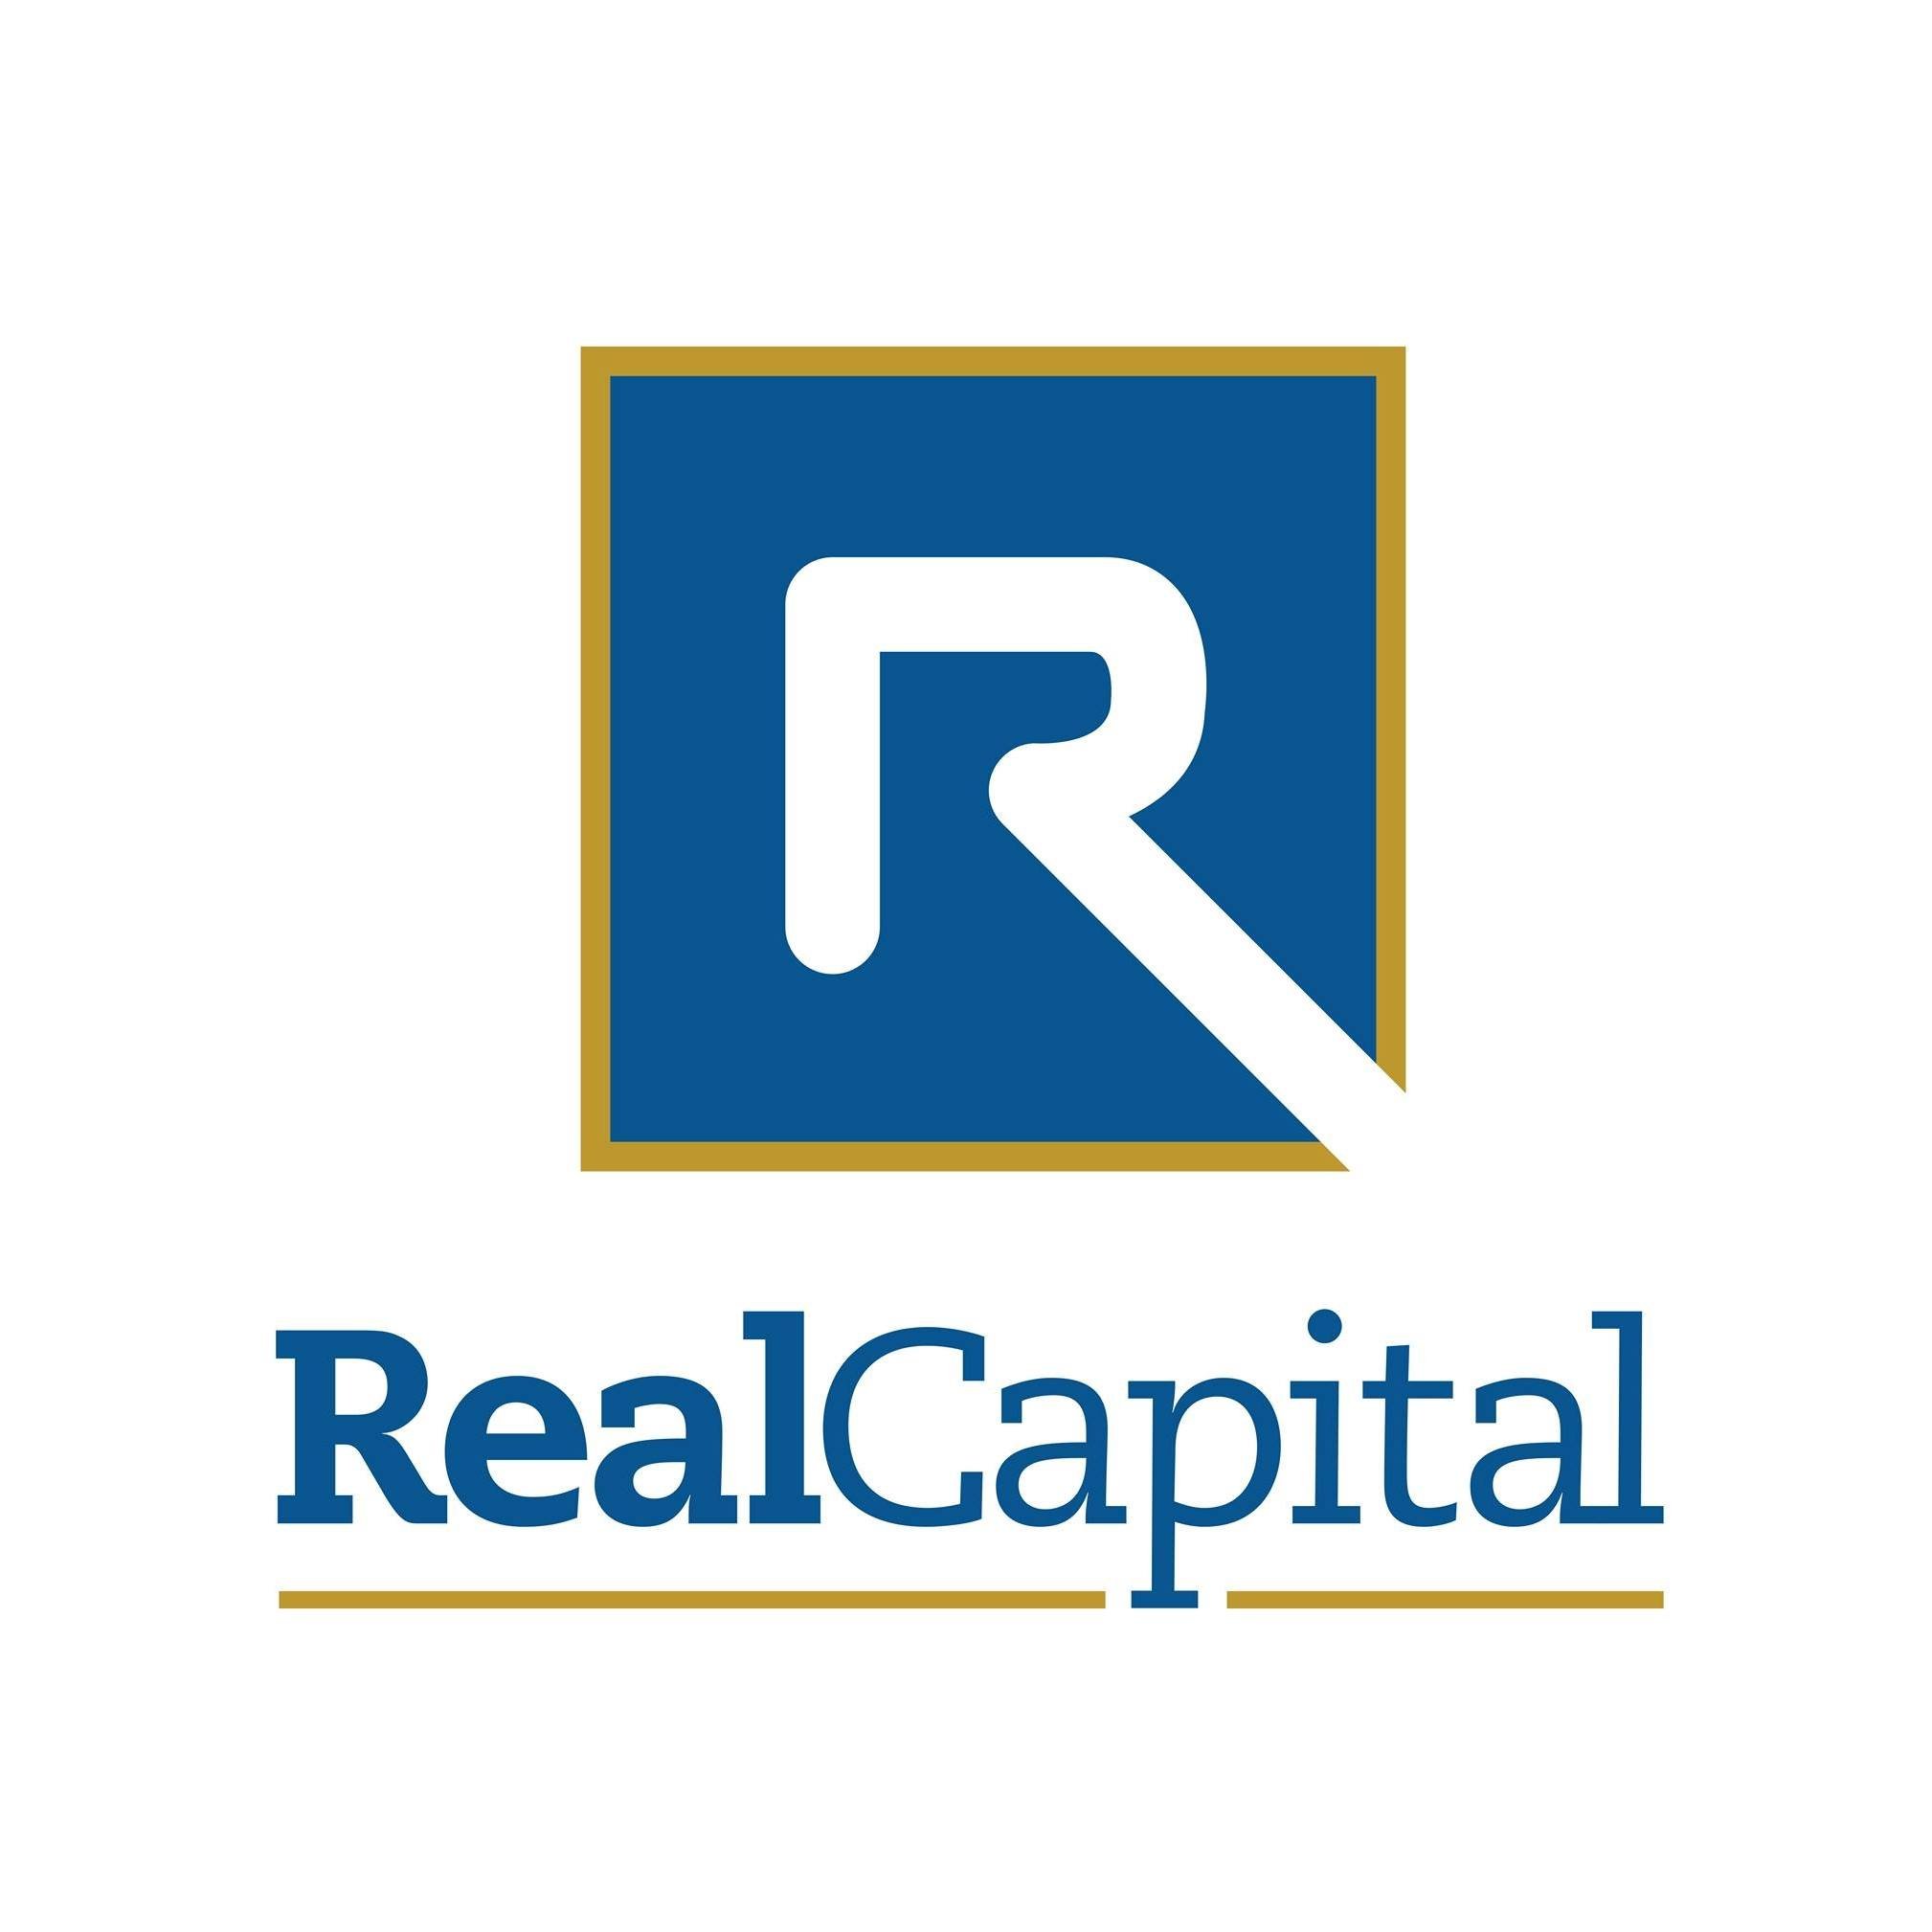 Realcapital logo.jpeg